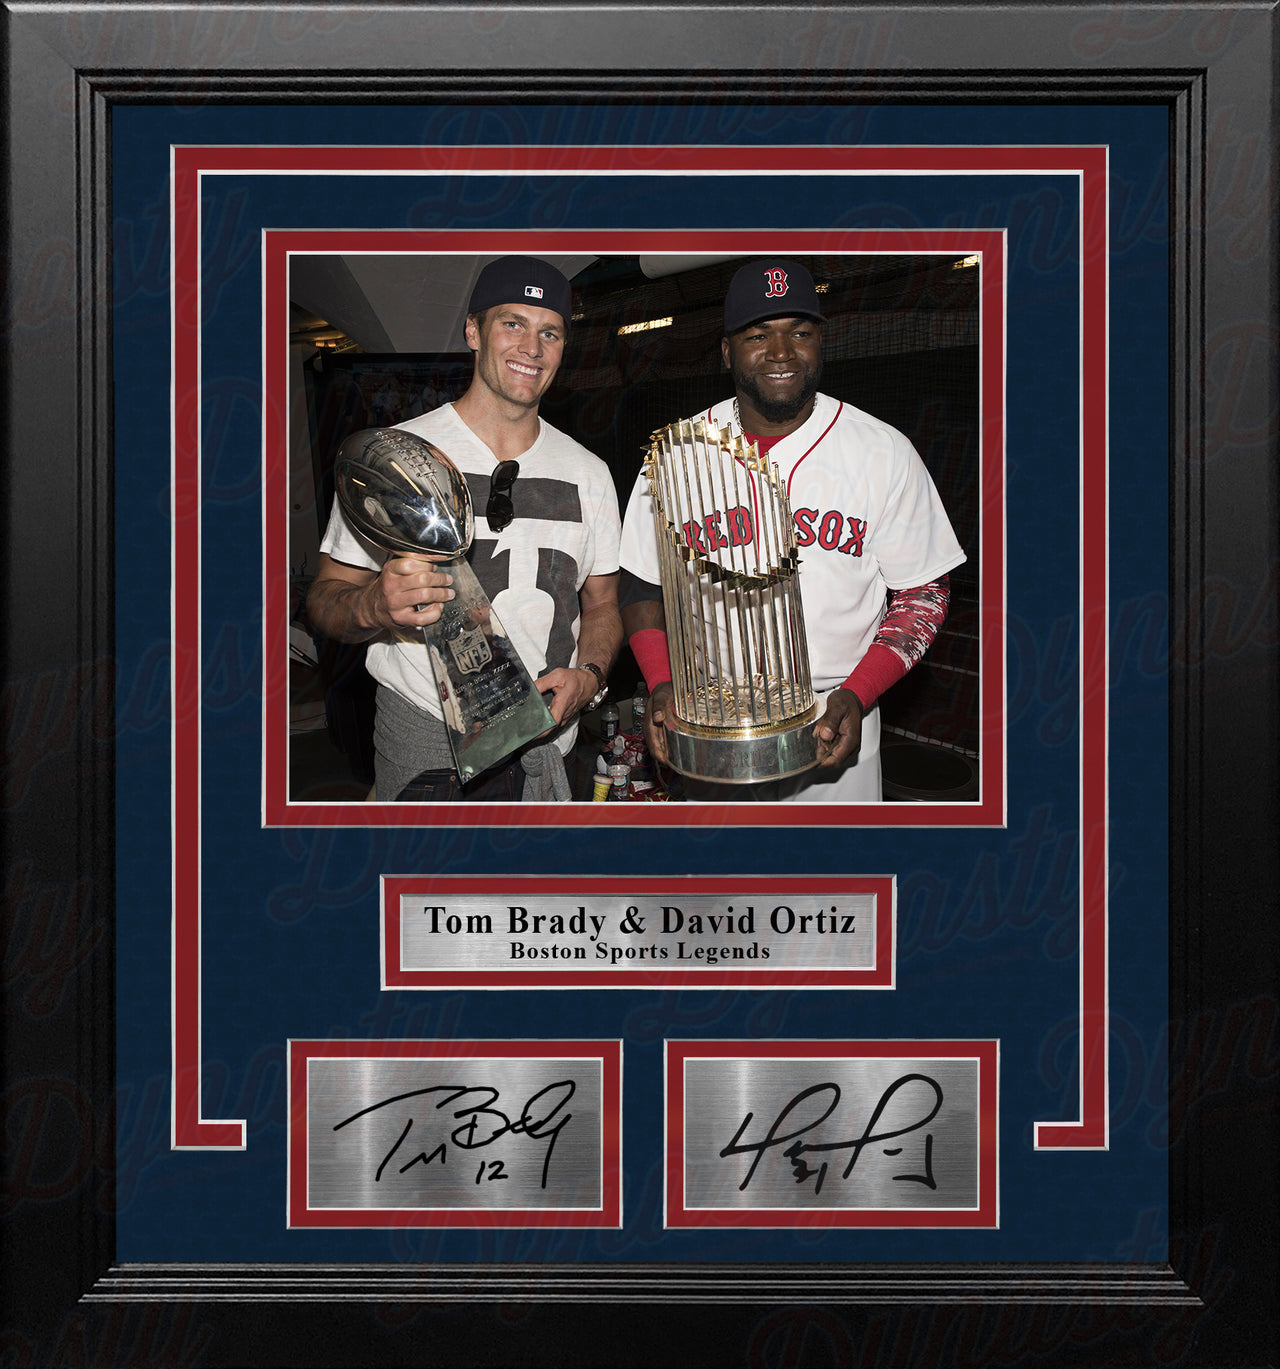 Tom Brady & David Ortiz 8" x 10" Framed Championship Trophy Photo with Engraved Autographs - Dynasty Sports & Framing 